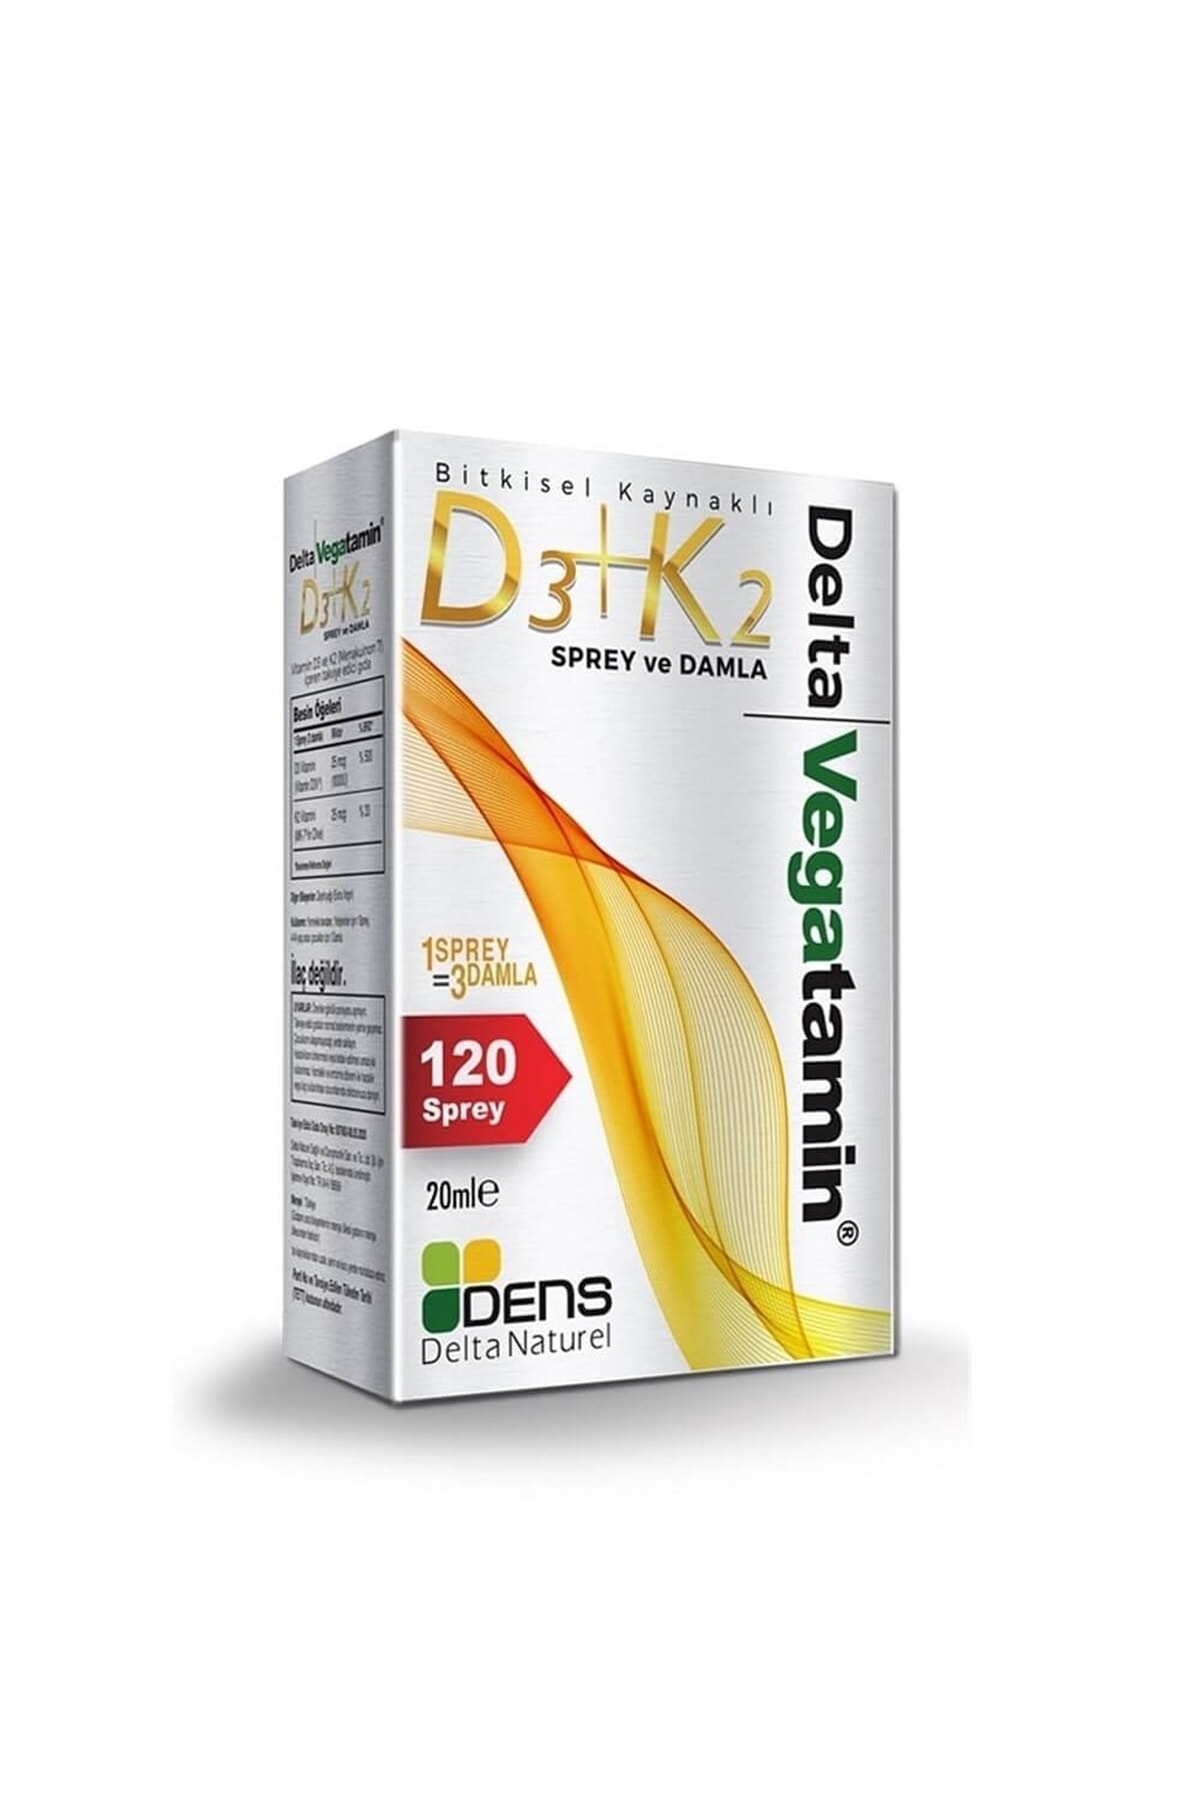 Dens Delta Naturel Vegatamin Vegan D3+k2 Sprey - Damla 20ml